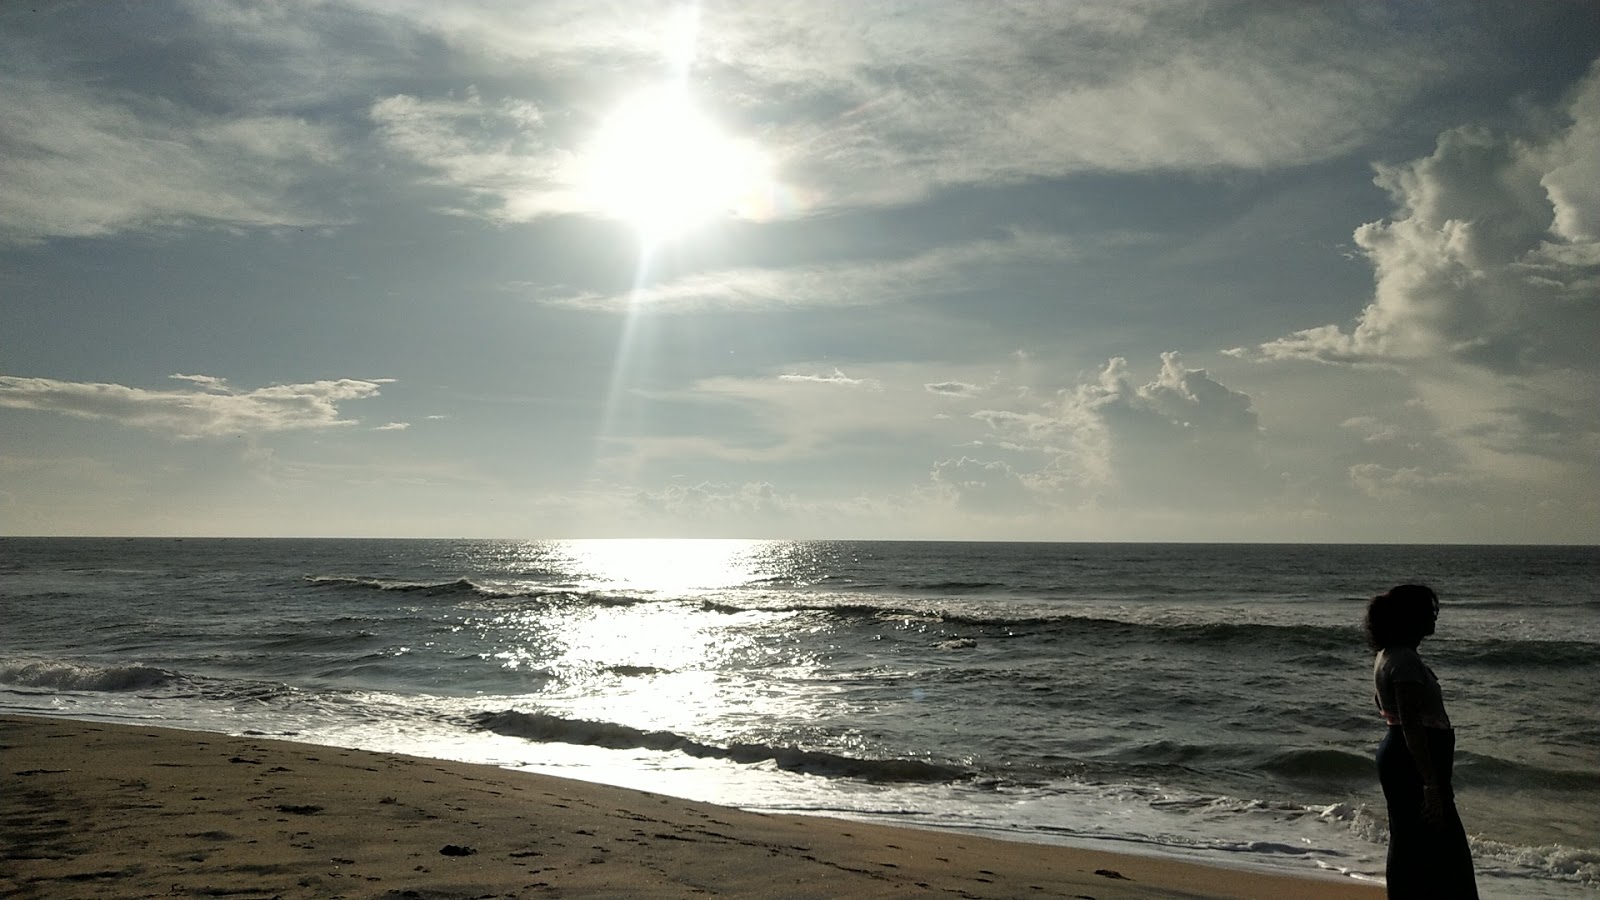 Fotografie cu Kancheru Beach - locul popular printre cunoscătorii de relaxare